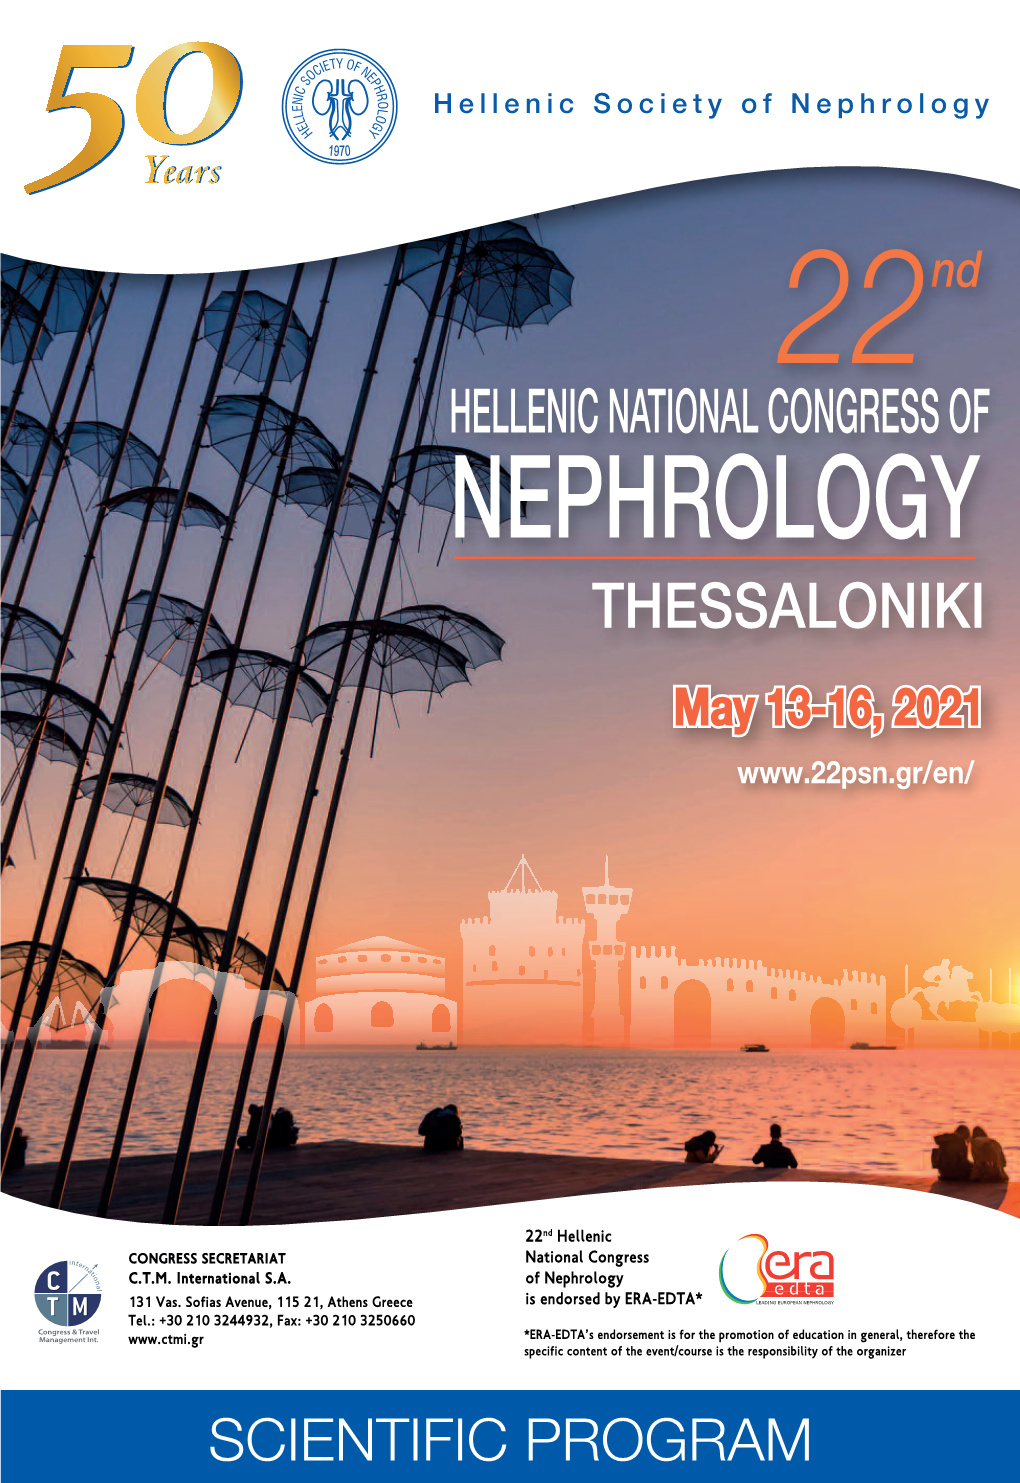 Nephrology Thessaloniki